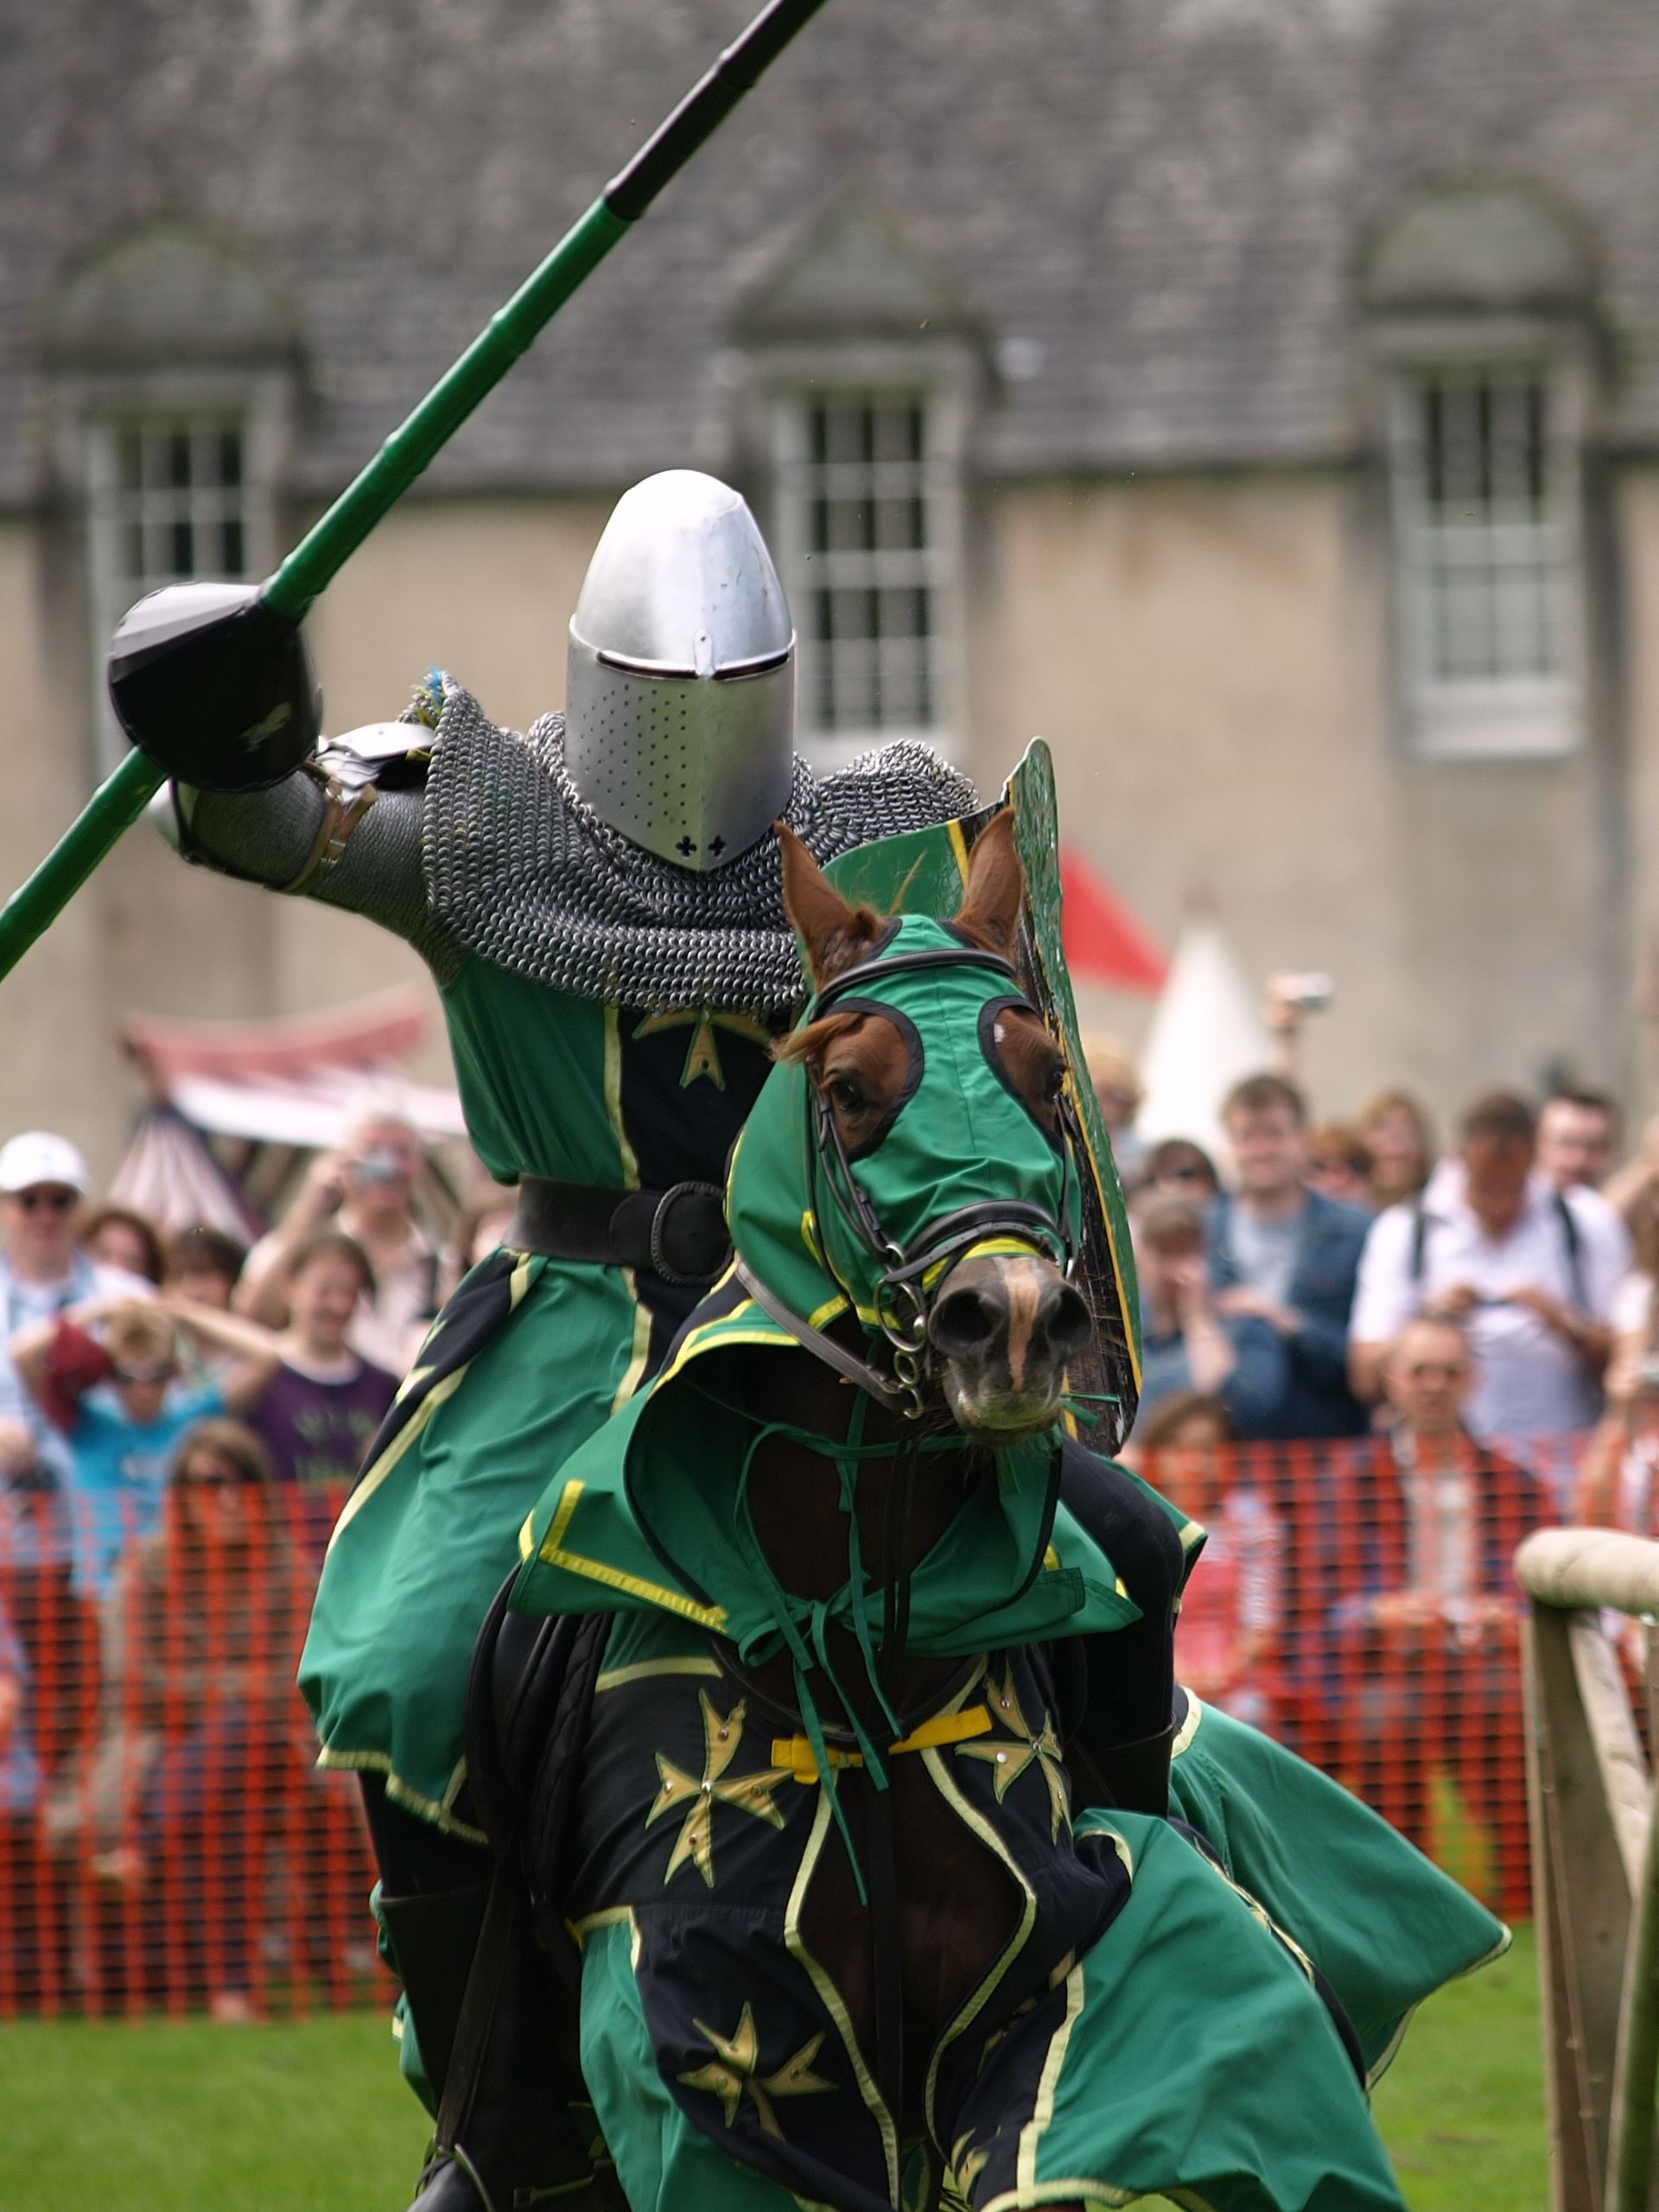 Medieval Festival Jousting Tournament